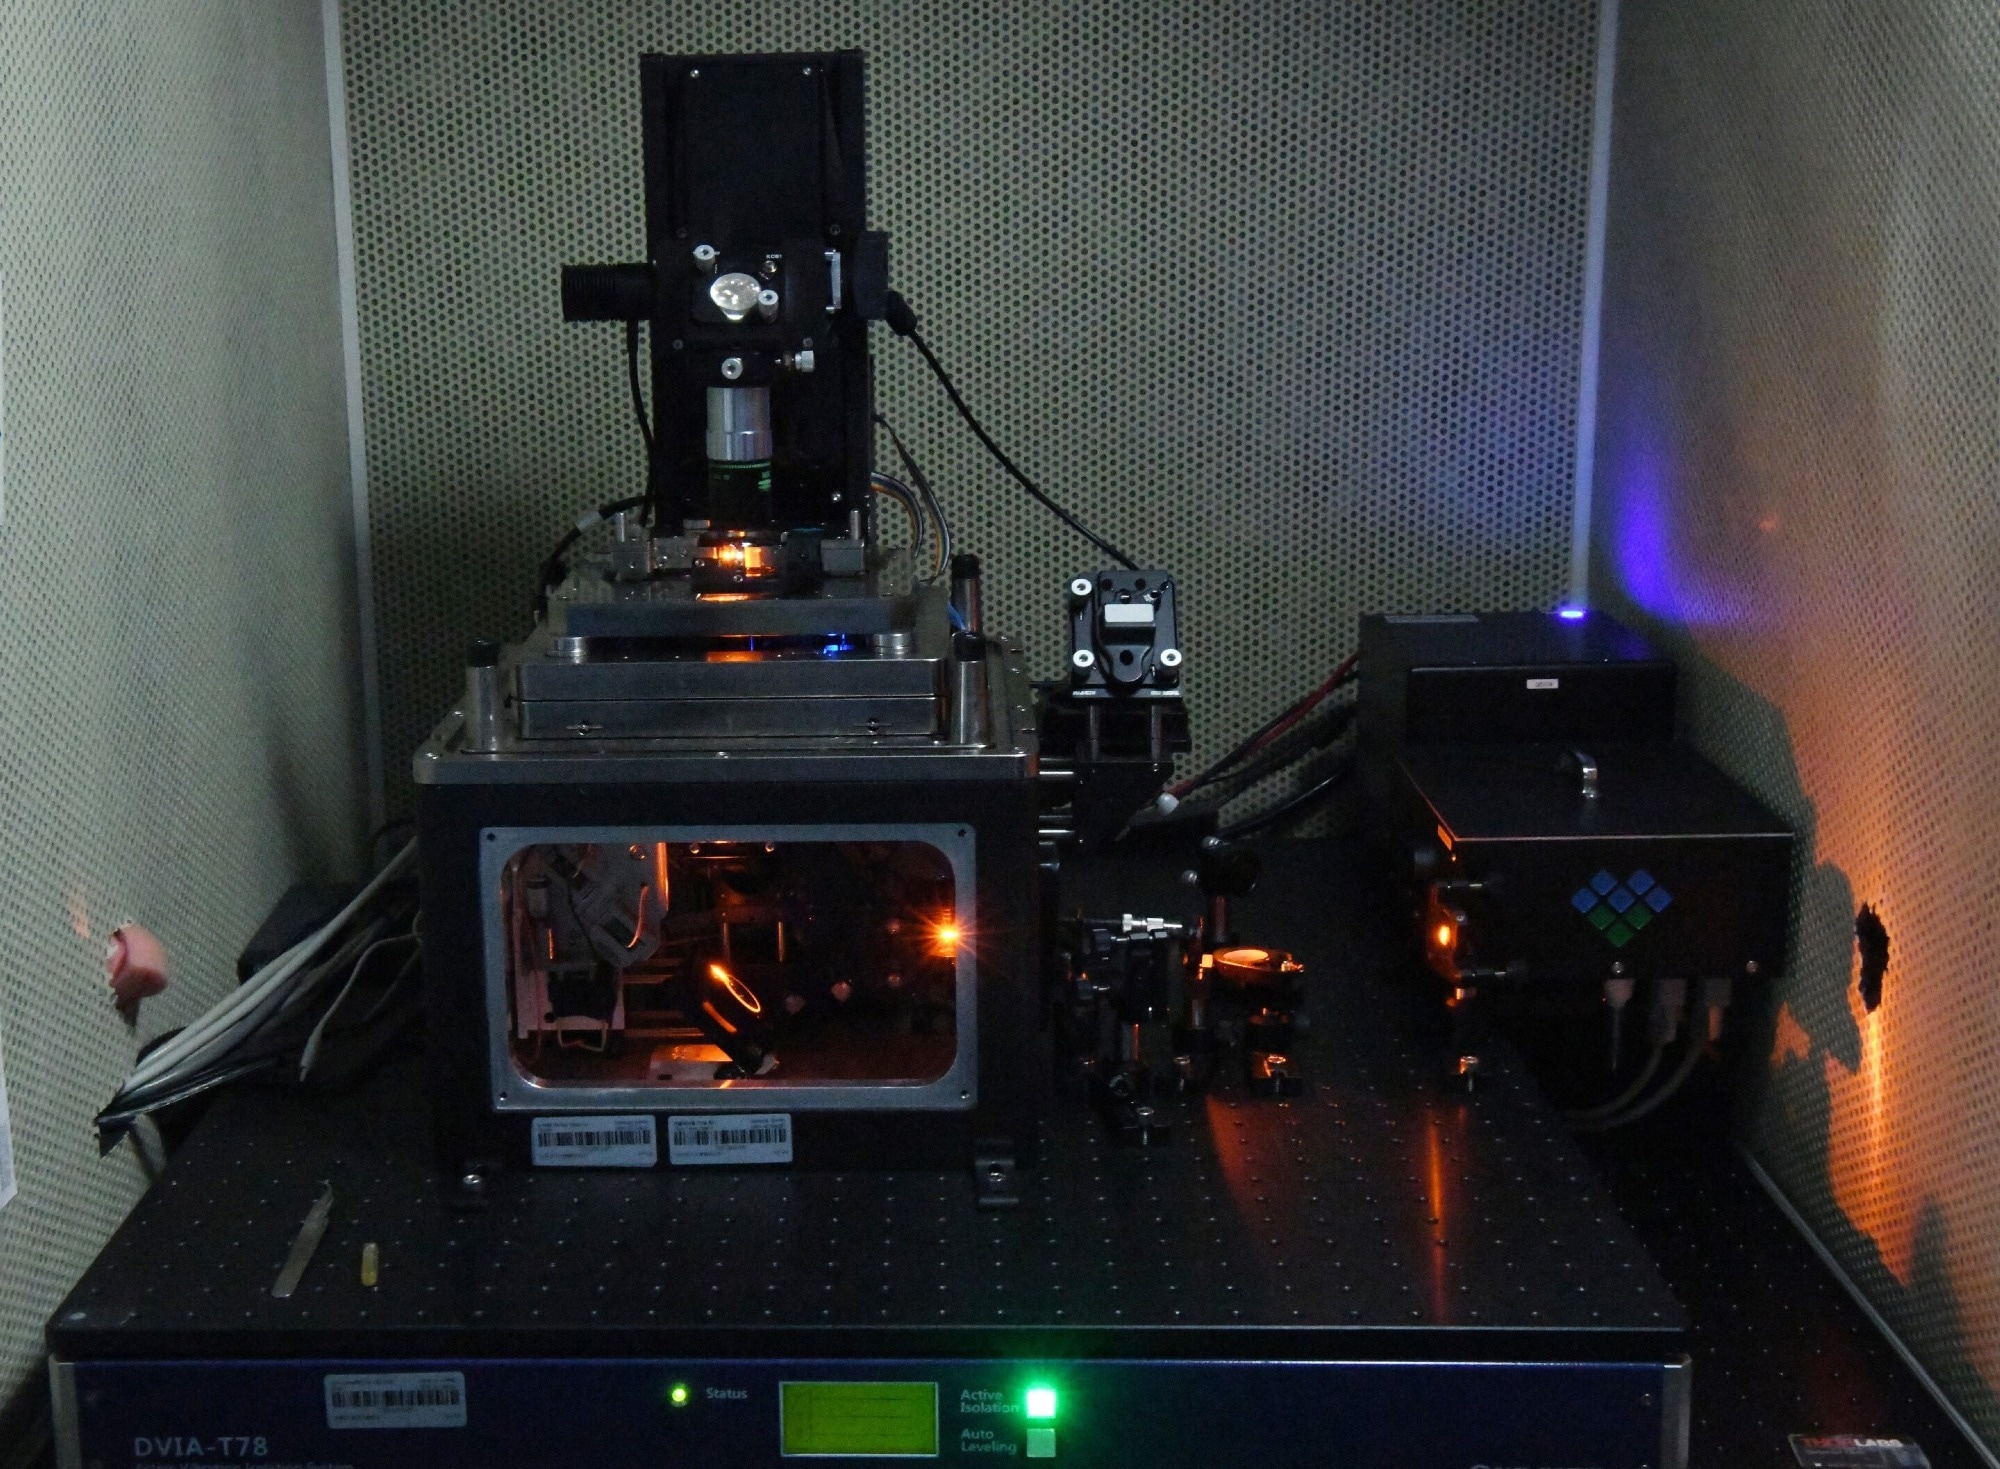 Nano Microscope Offers Simultaneous Measurement of Properties